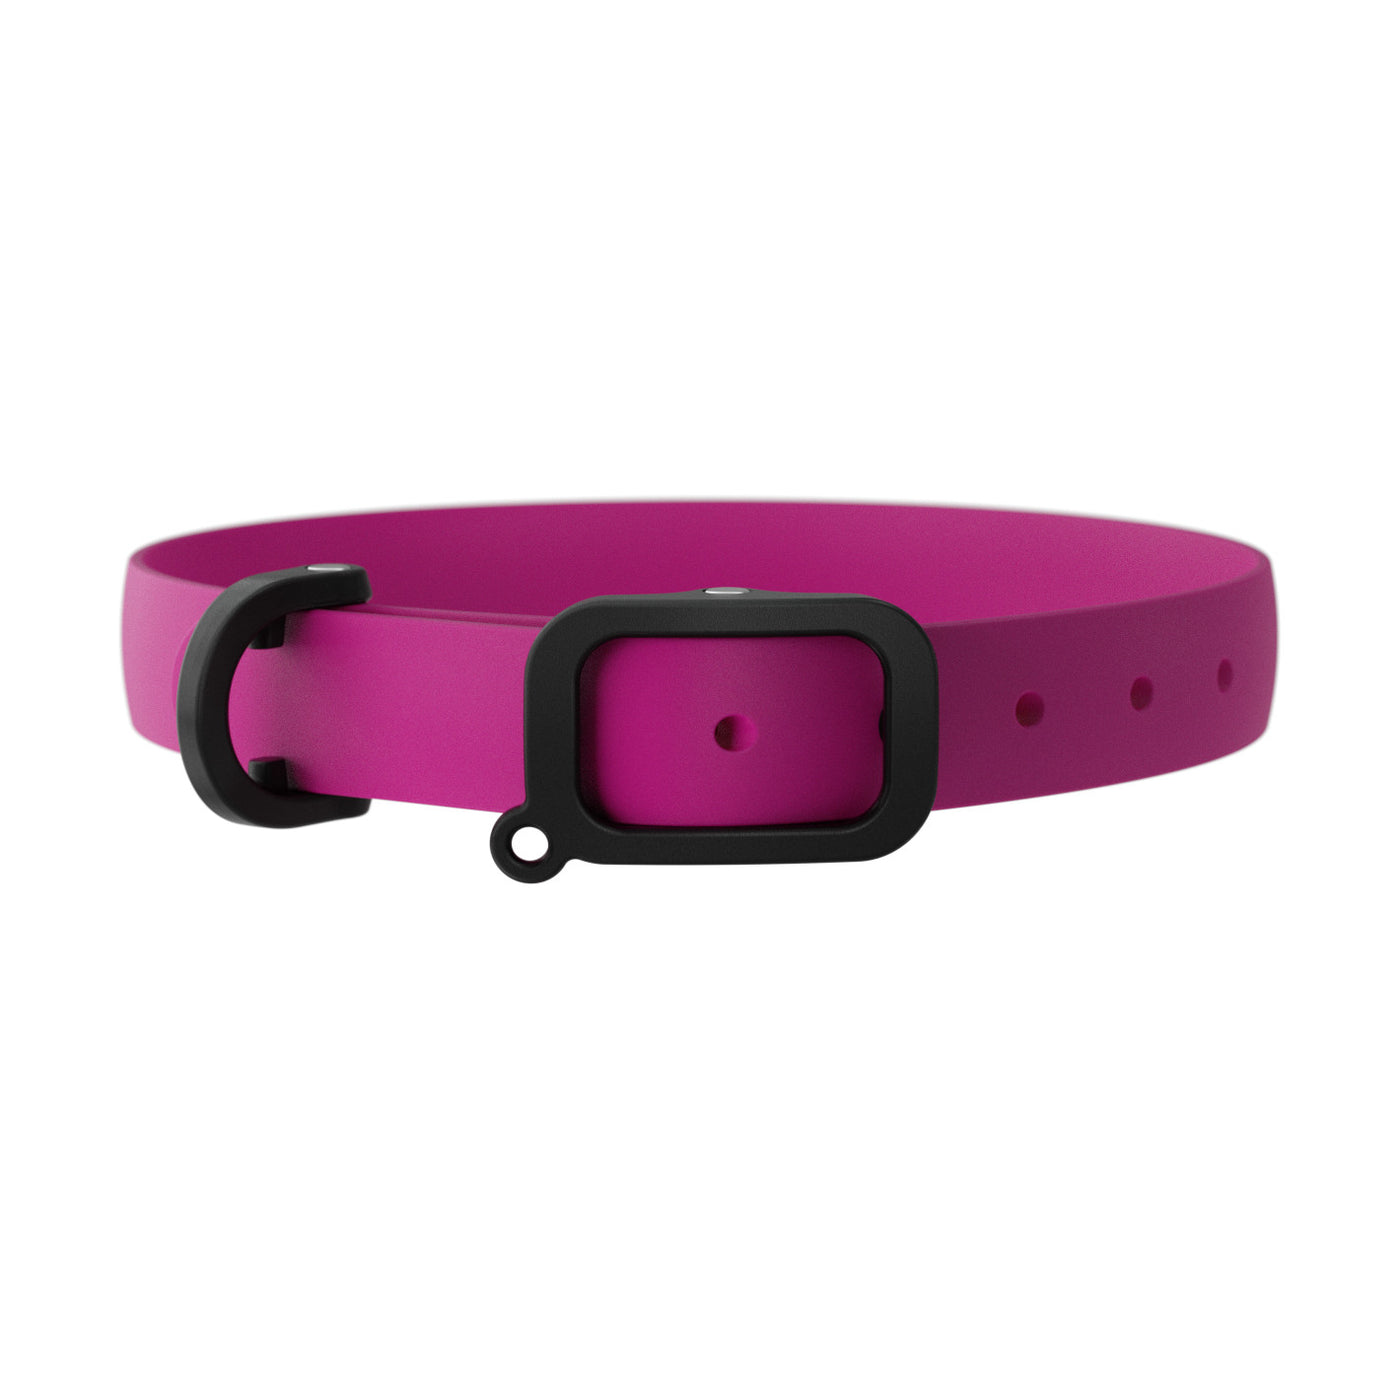 NUVUQ - Waterproof and Lightweight Dog Collar - Raspberry Pink